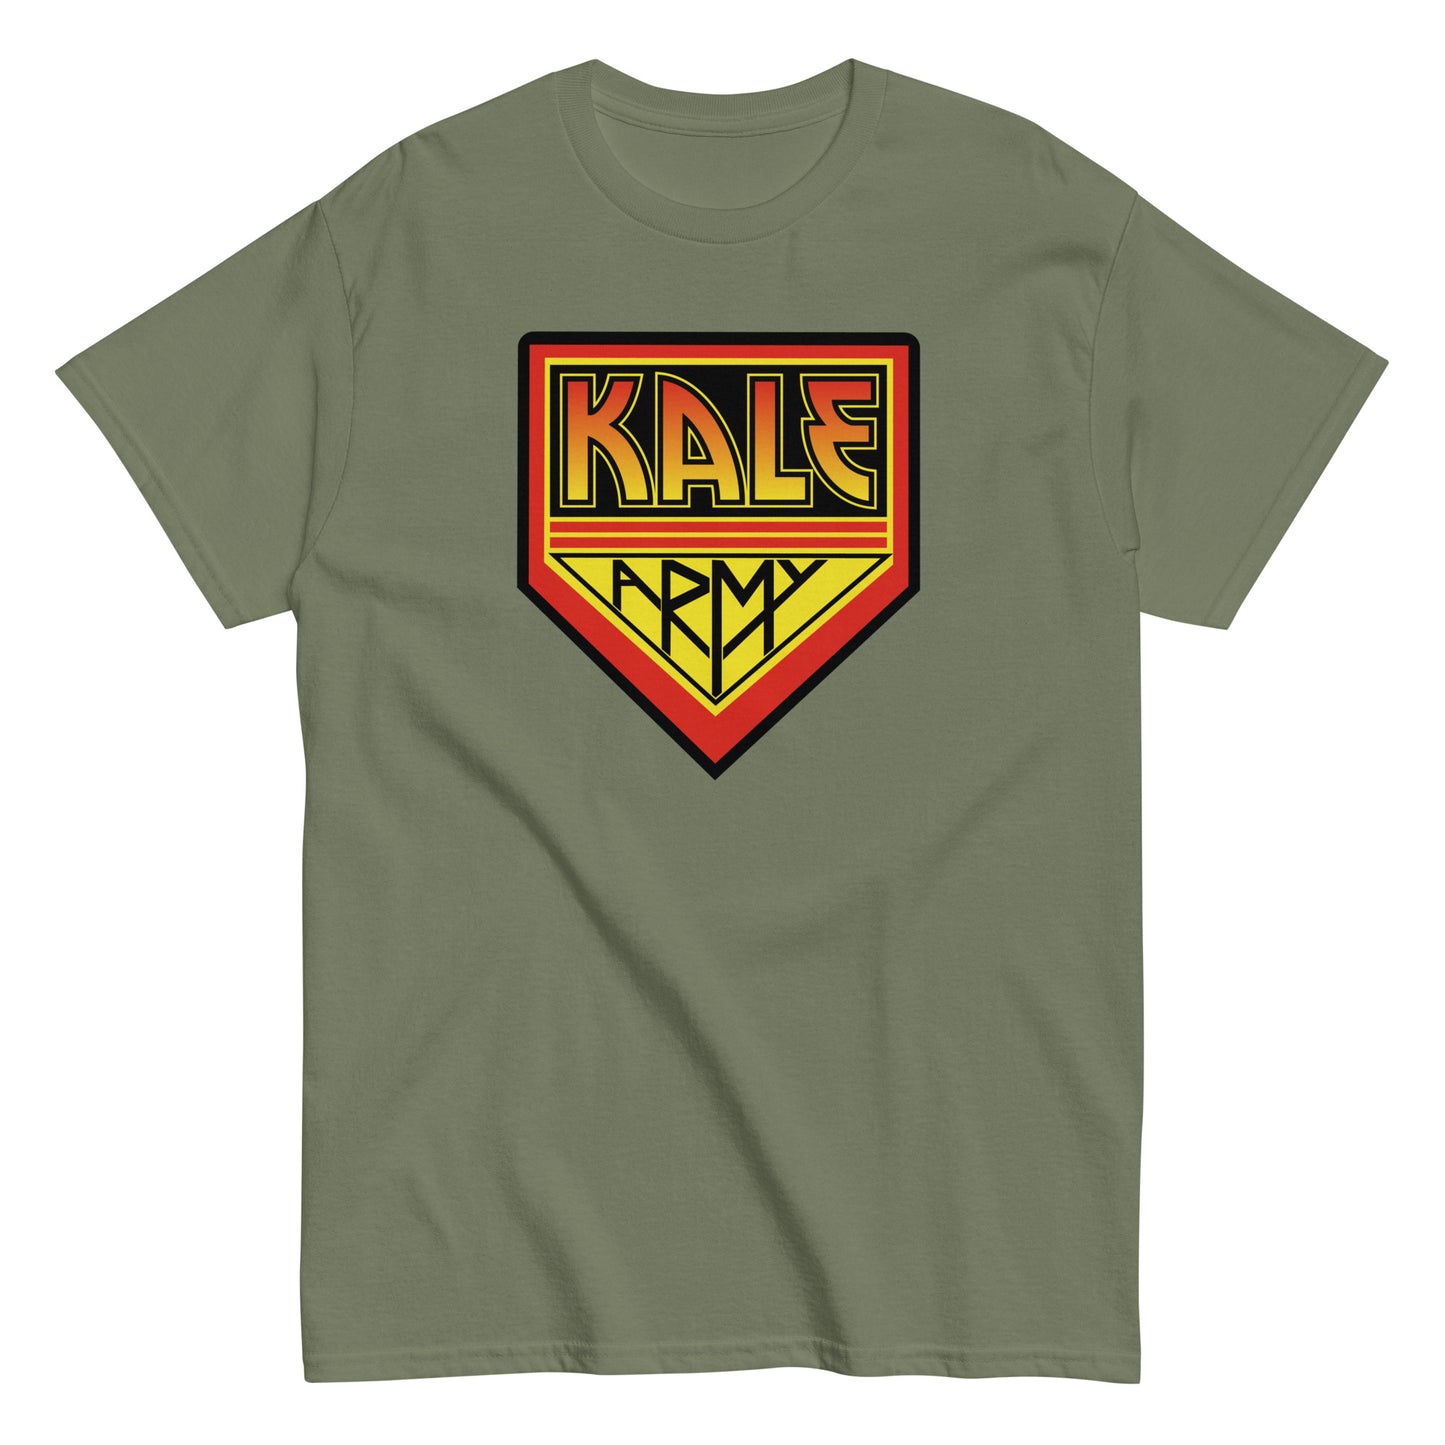 Kale Army Rock Shirt Men's classic tee - White Buffalo Vegan Apparel